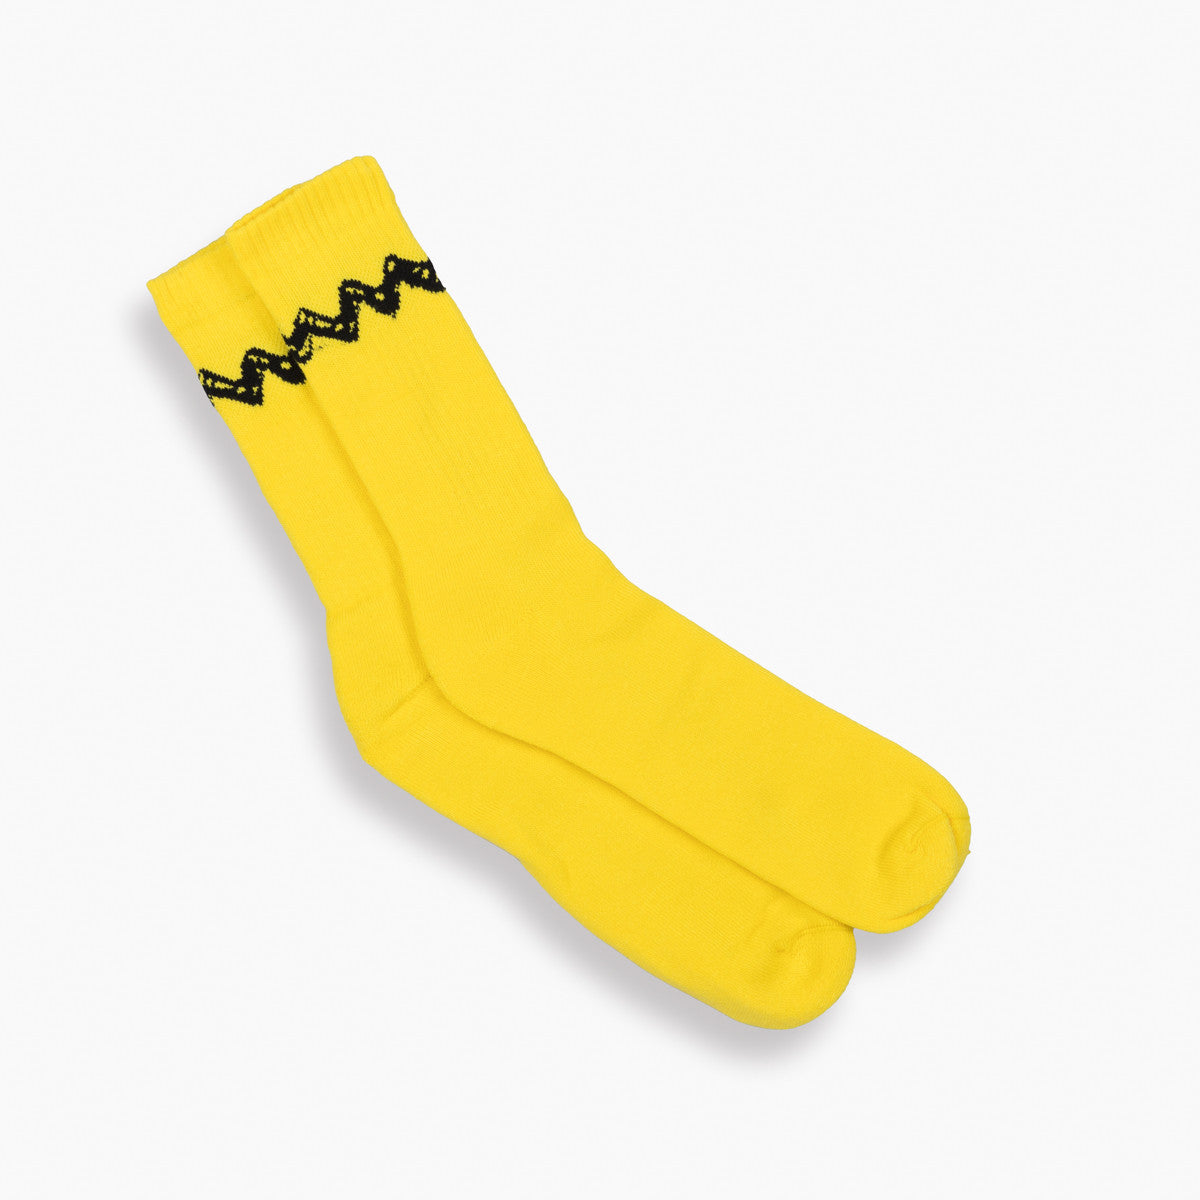 Charlie Brown Socks - SIZE 3-6